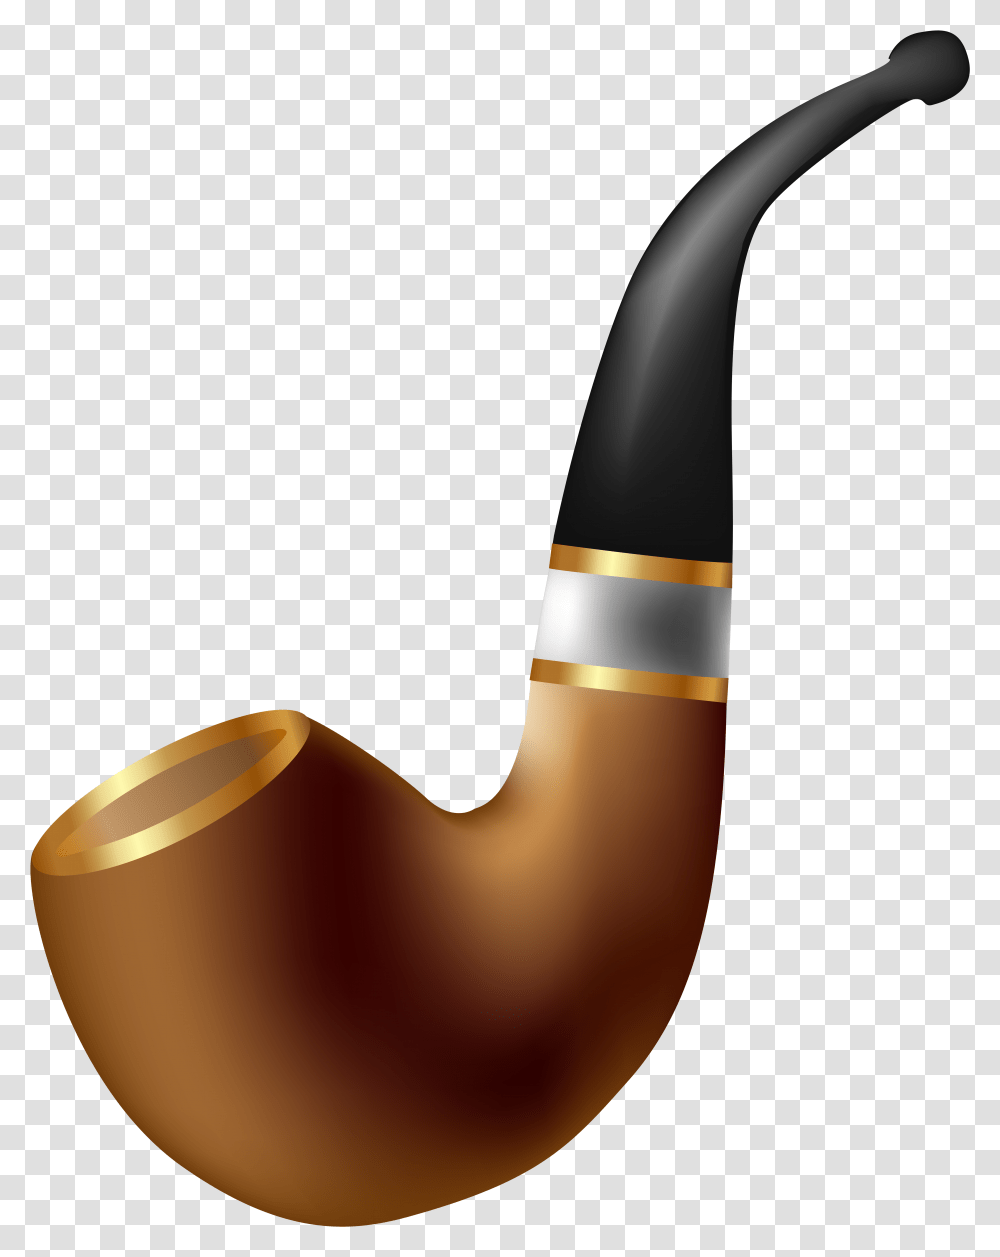 Pipes Cigar Smoking Pipe Clipart, Smoke Pipe, Lamp Transparent Png